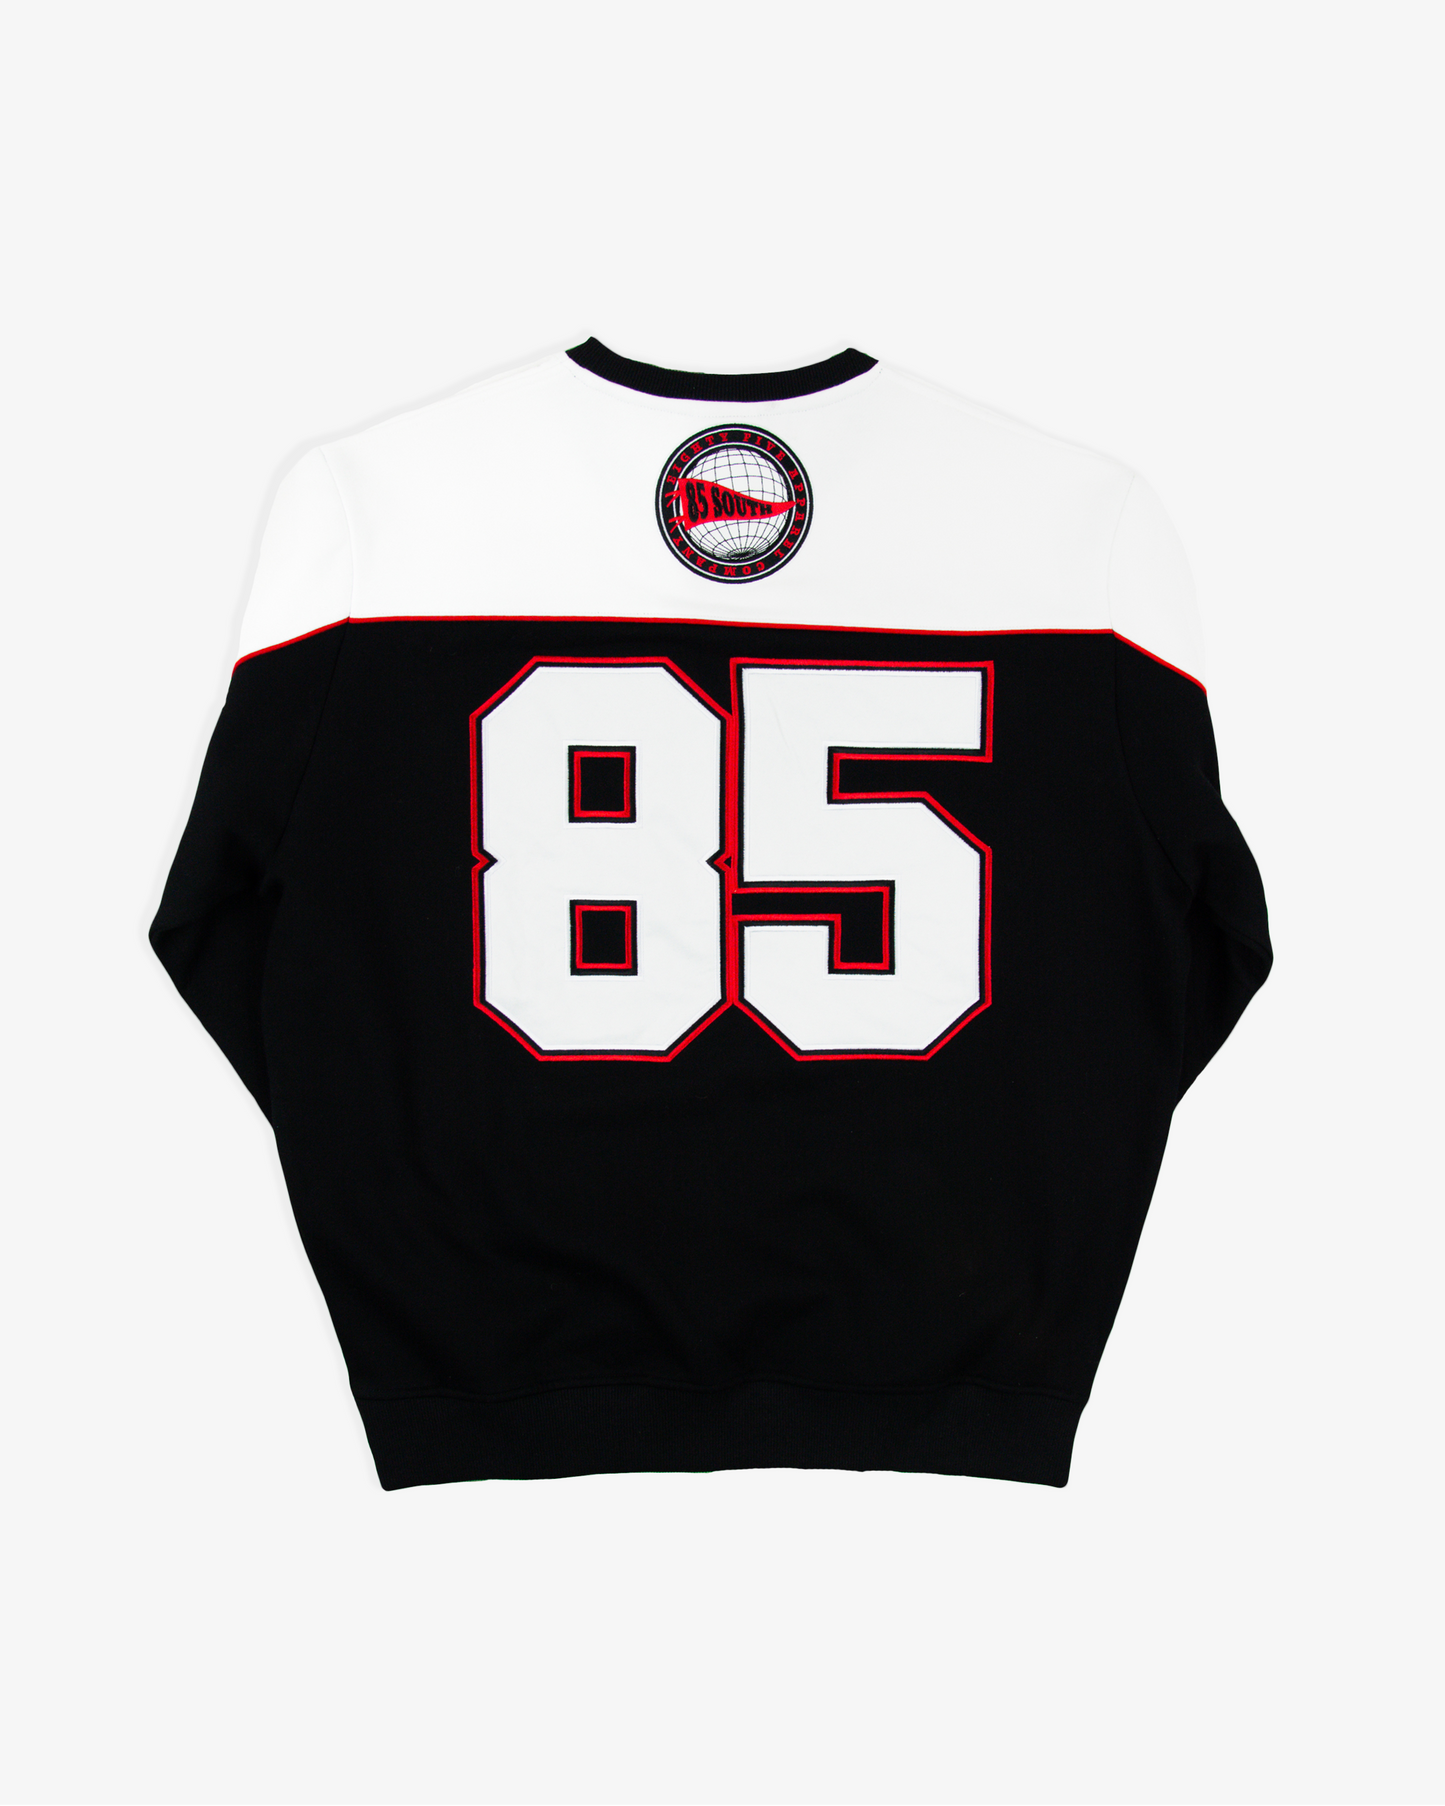 85 South Bred Crewneck - Formula One Red/Black/White